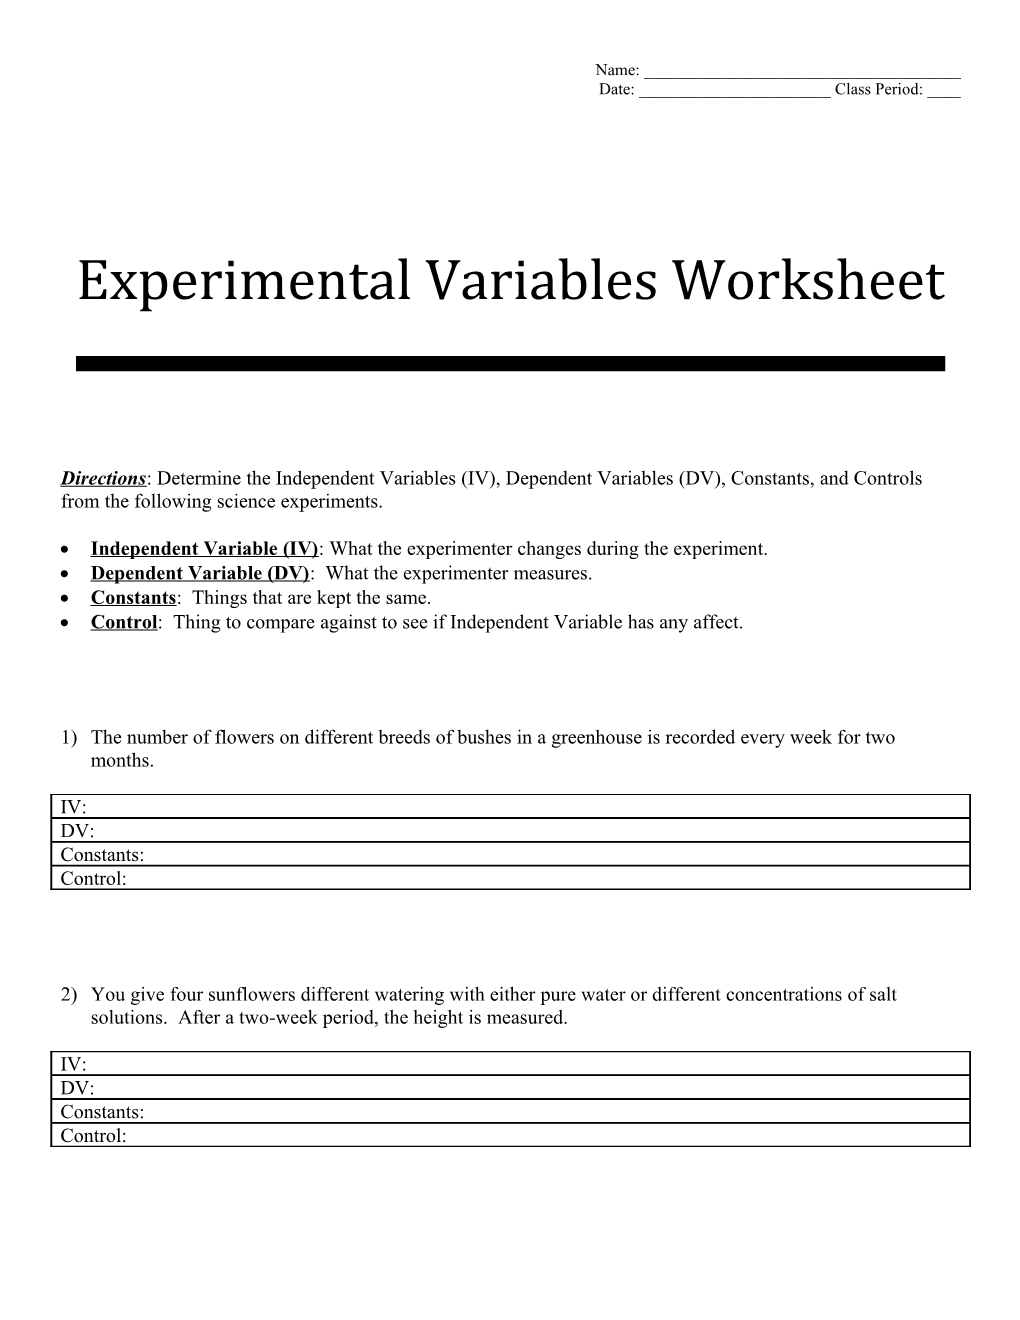 Experimental Variables Worksheet